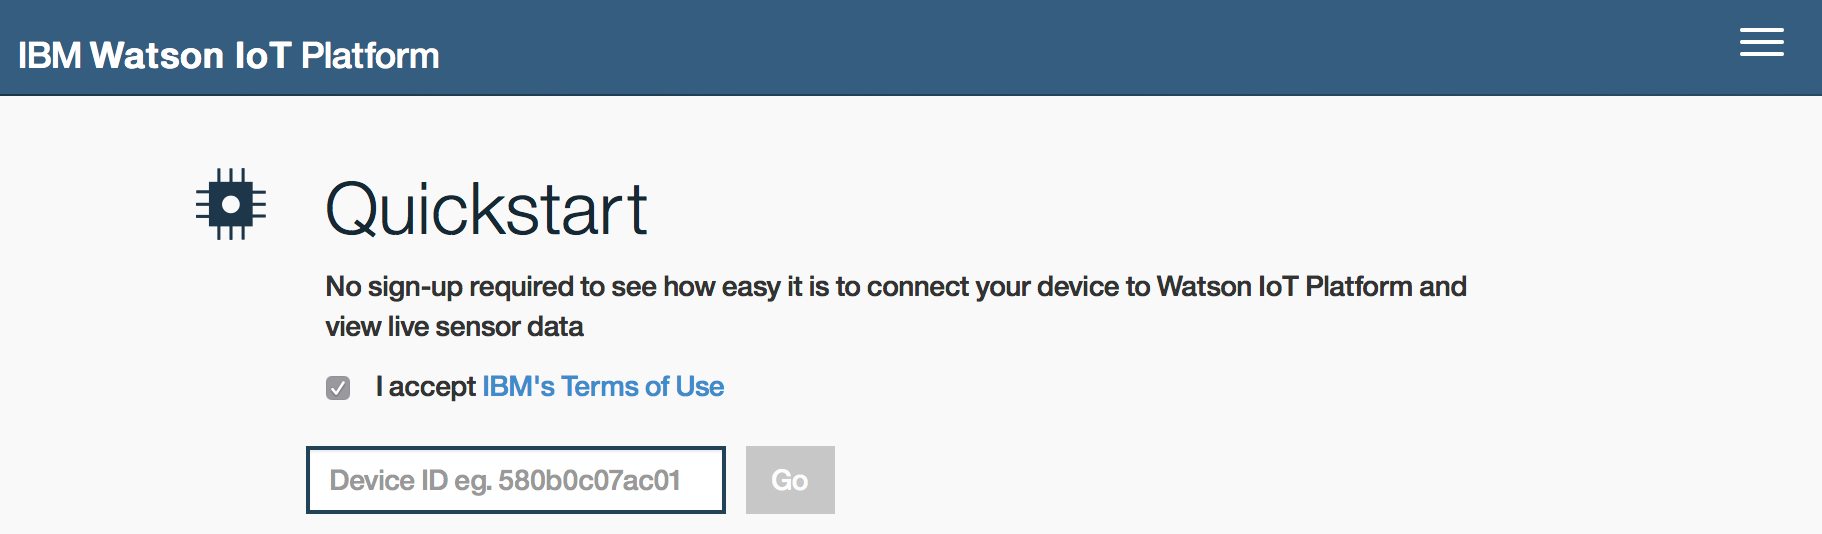 Watson IoT Platform Screenshot